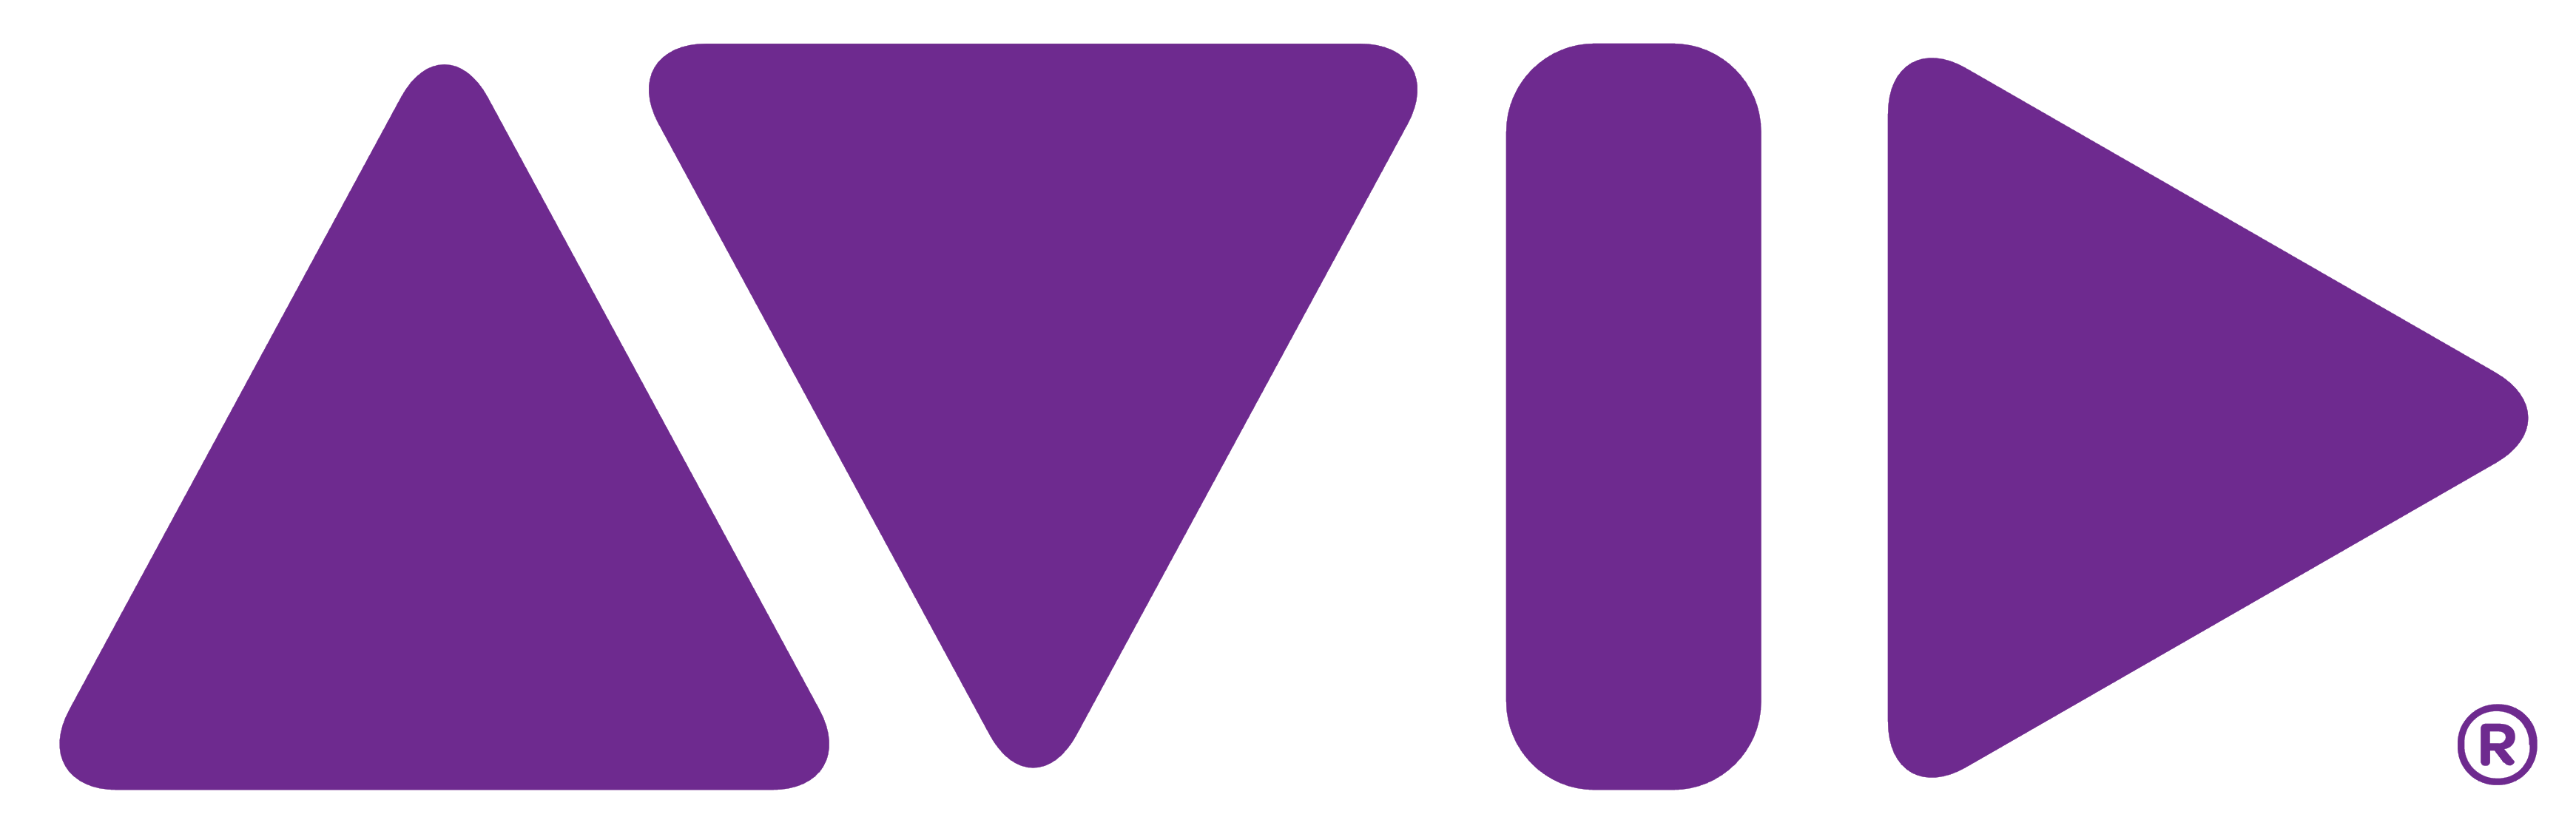 Avid logo, logotype